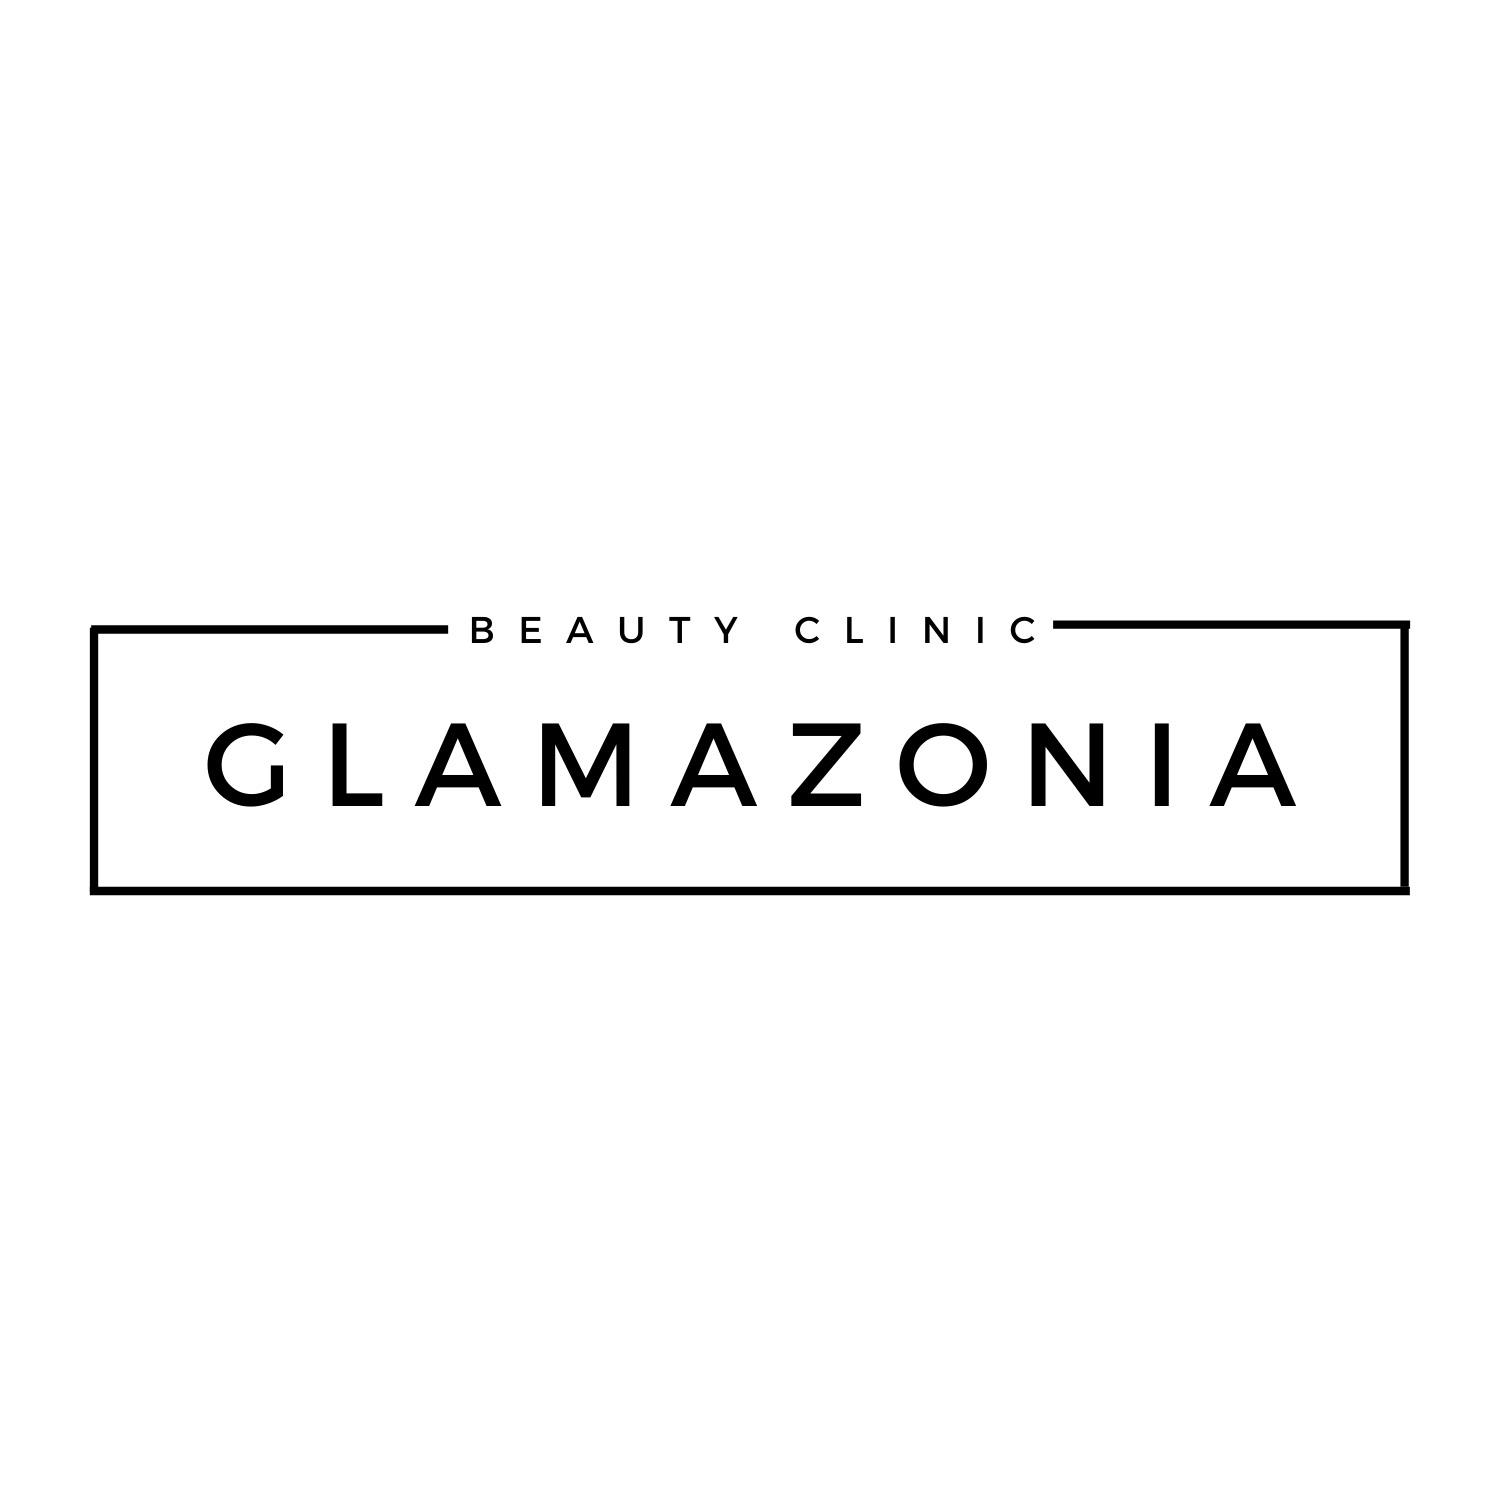 Glamazonia